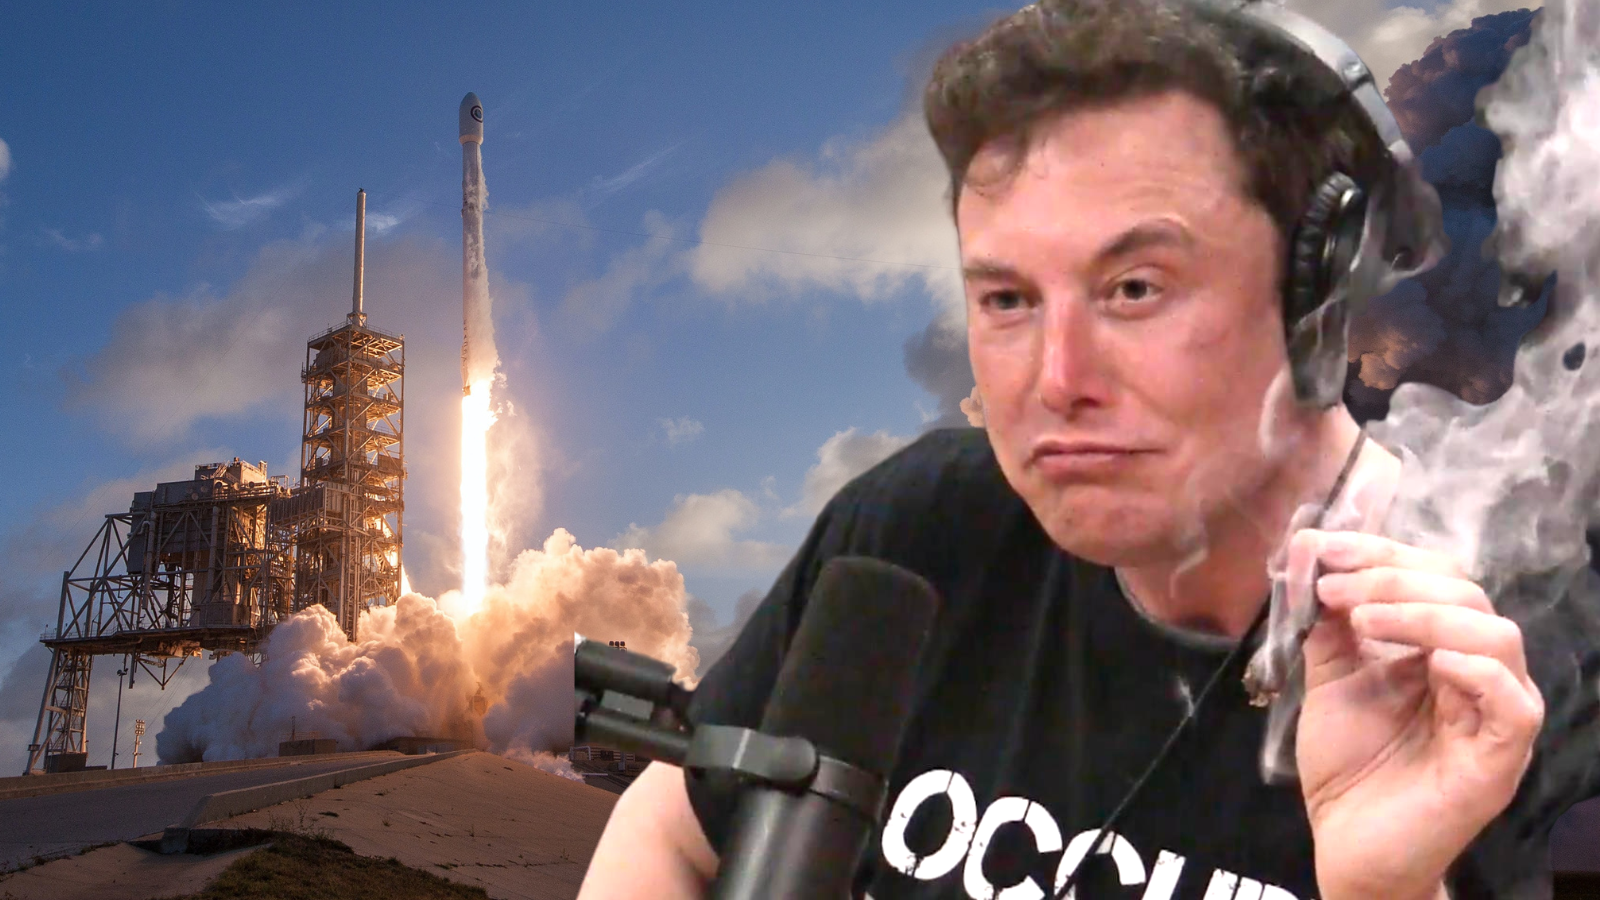 A New High: Elon Musk’s Historic Launch on 420